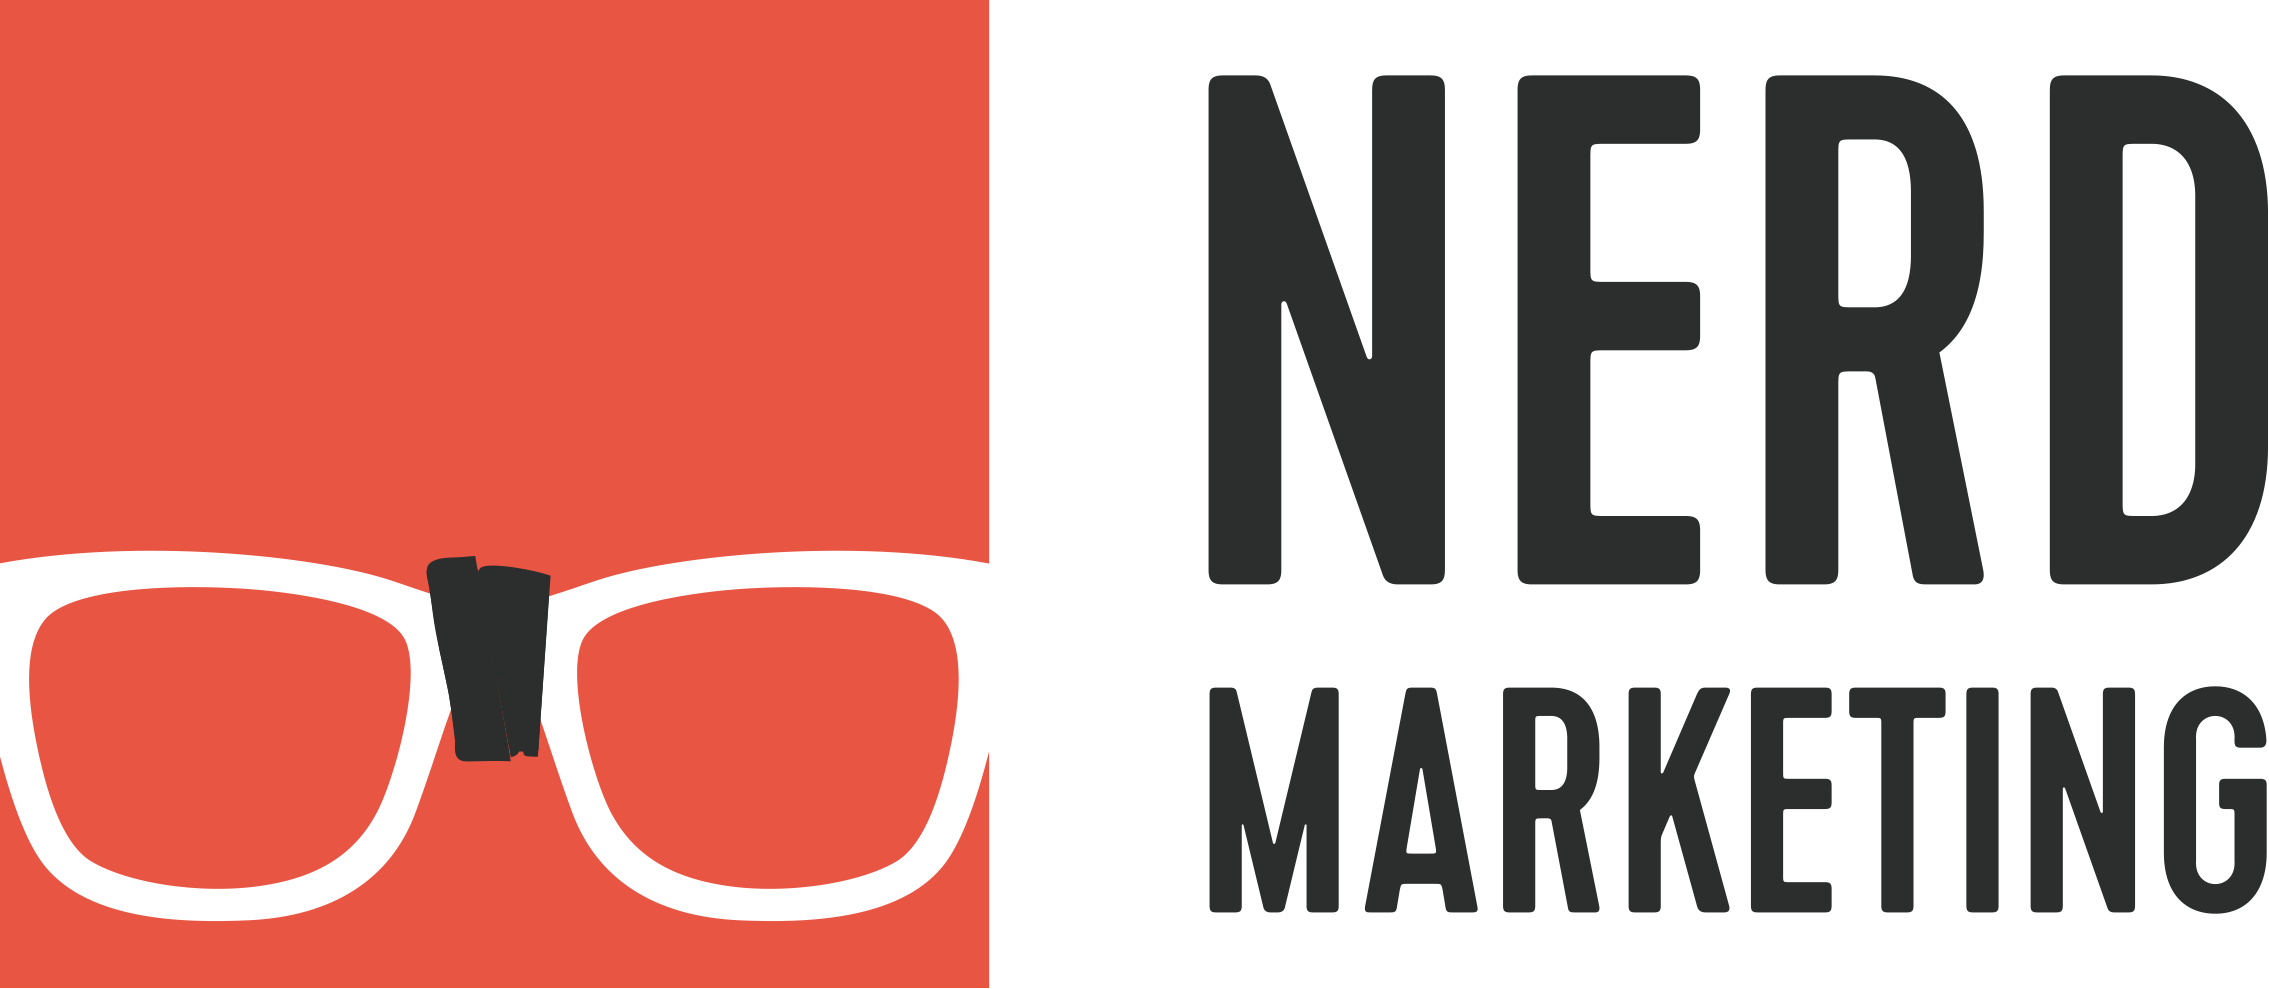 Nerd Marketing logo - red